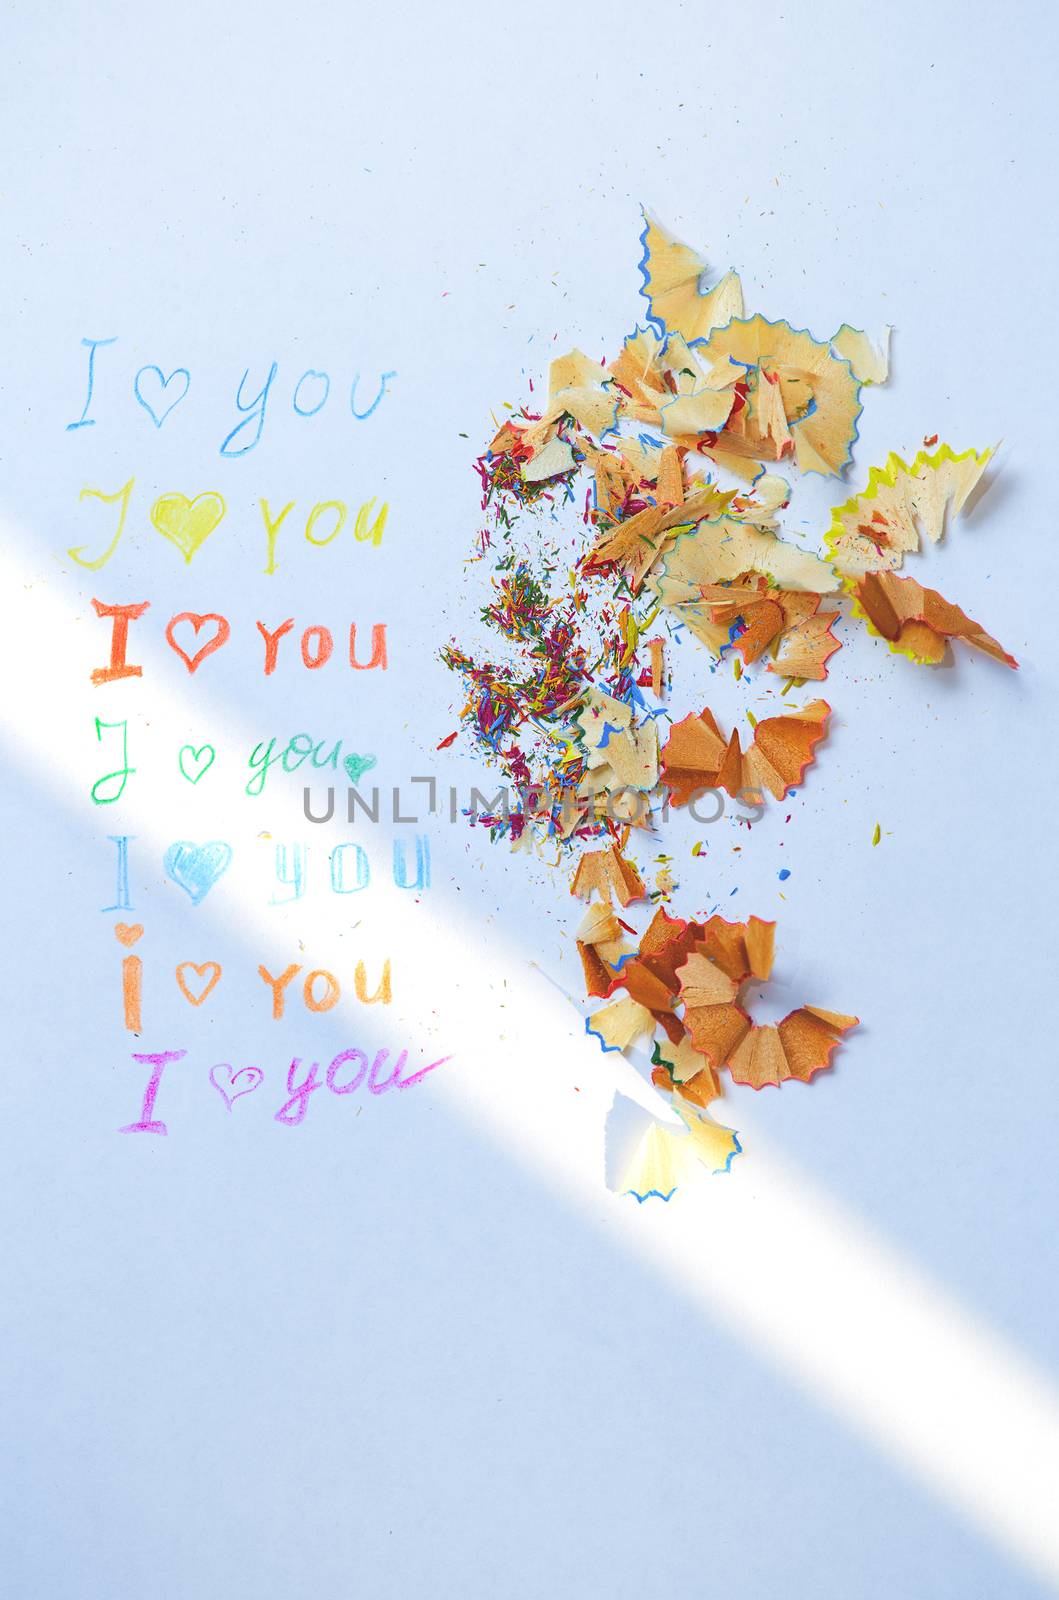 Love you by Novic